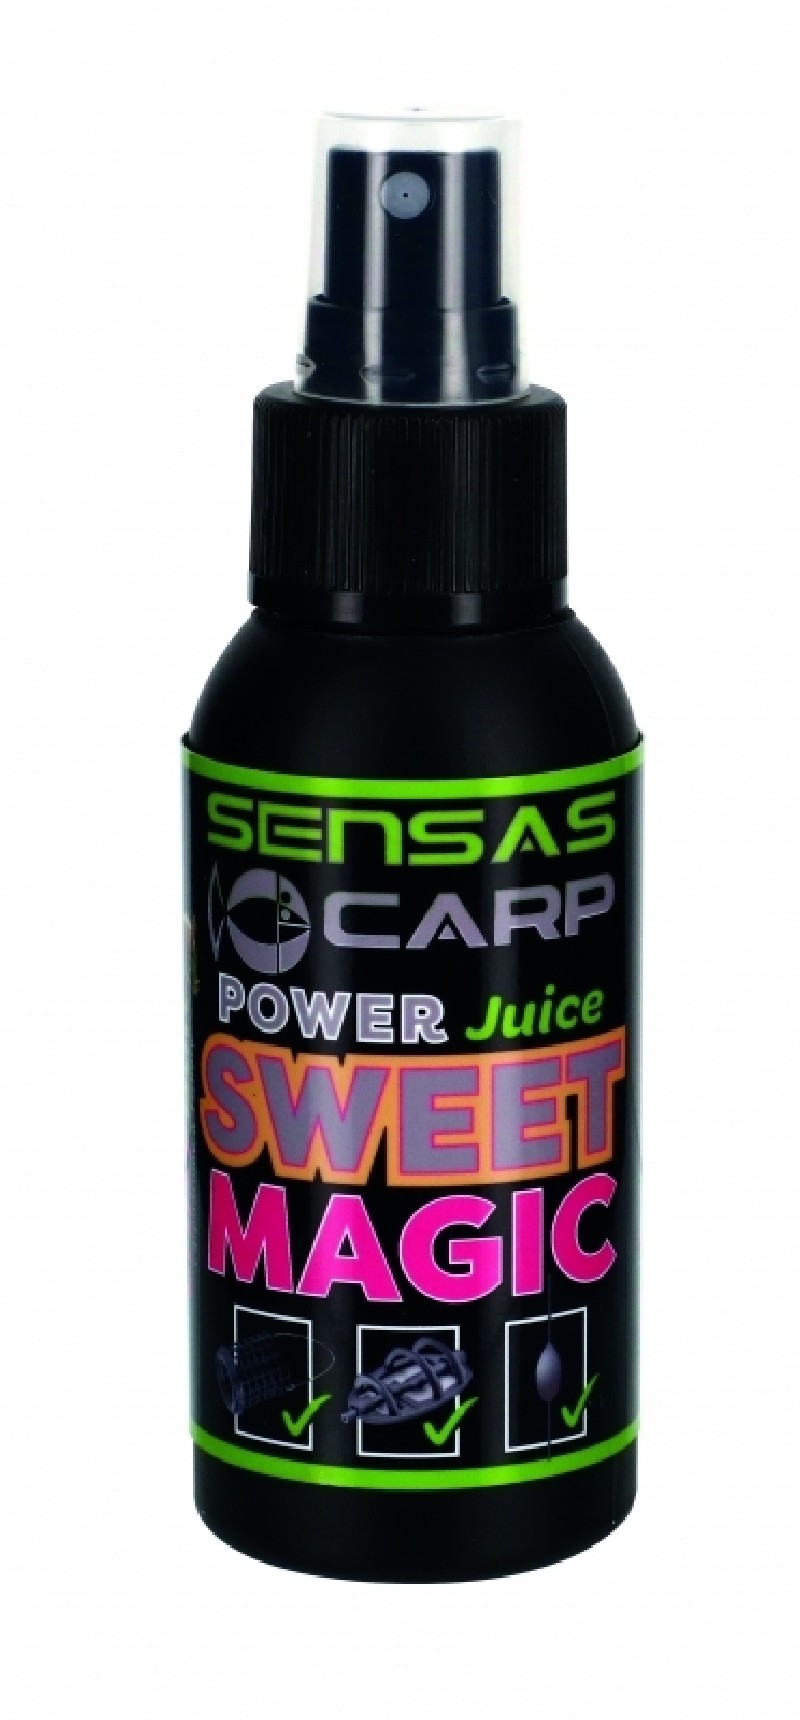 POWER JUICE SWEET MAGIC Sensas